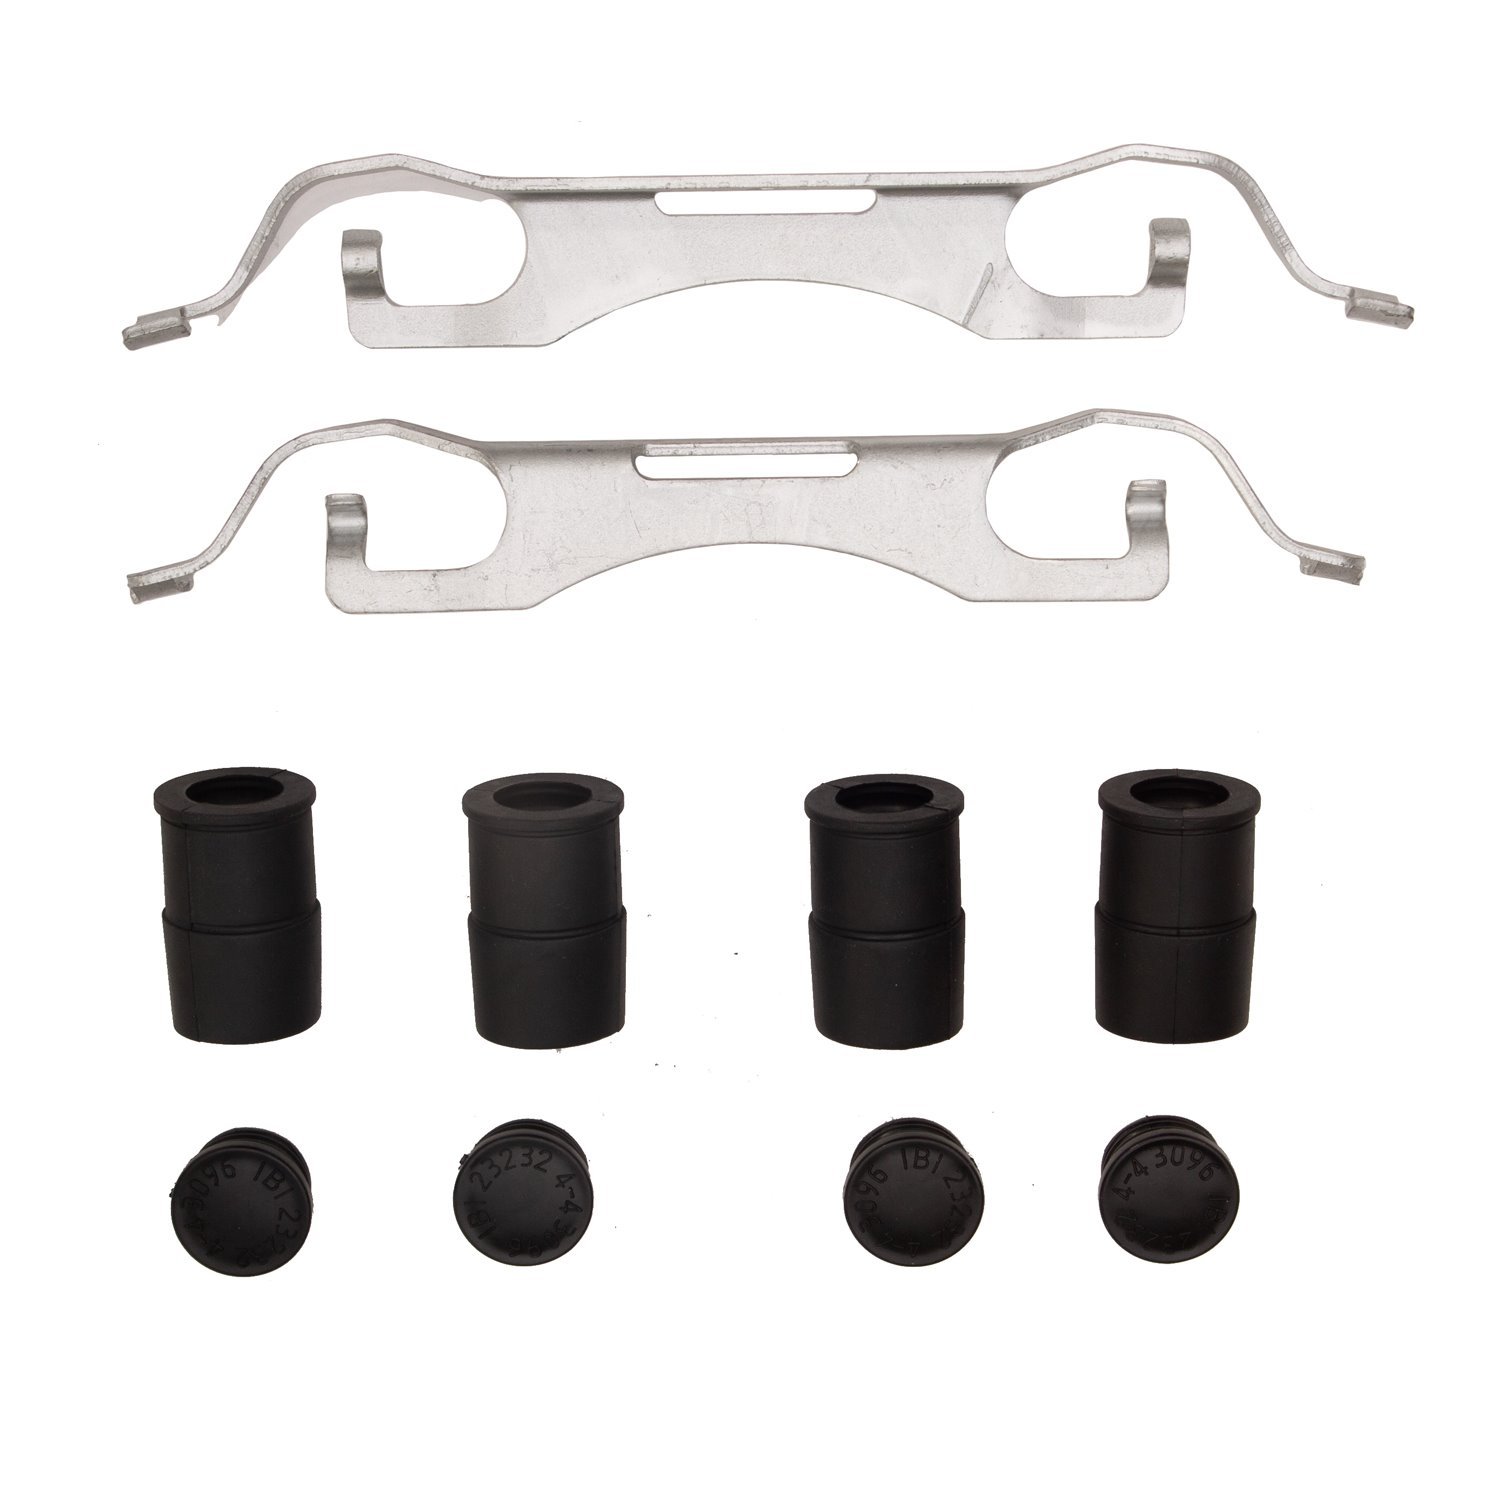 Disc Brake Hardware Kit, Fits Select Fits Multiple Makes/Models, Position: Rear